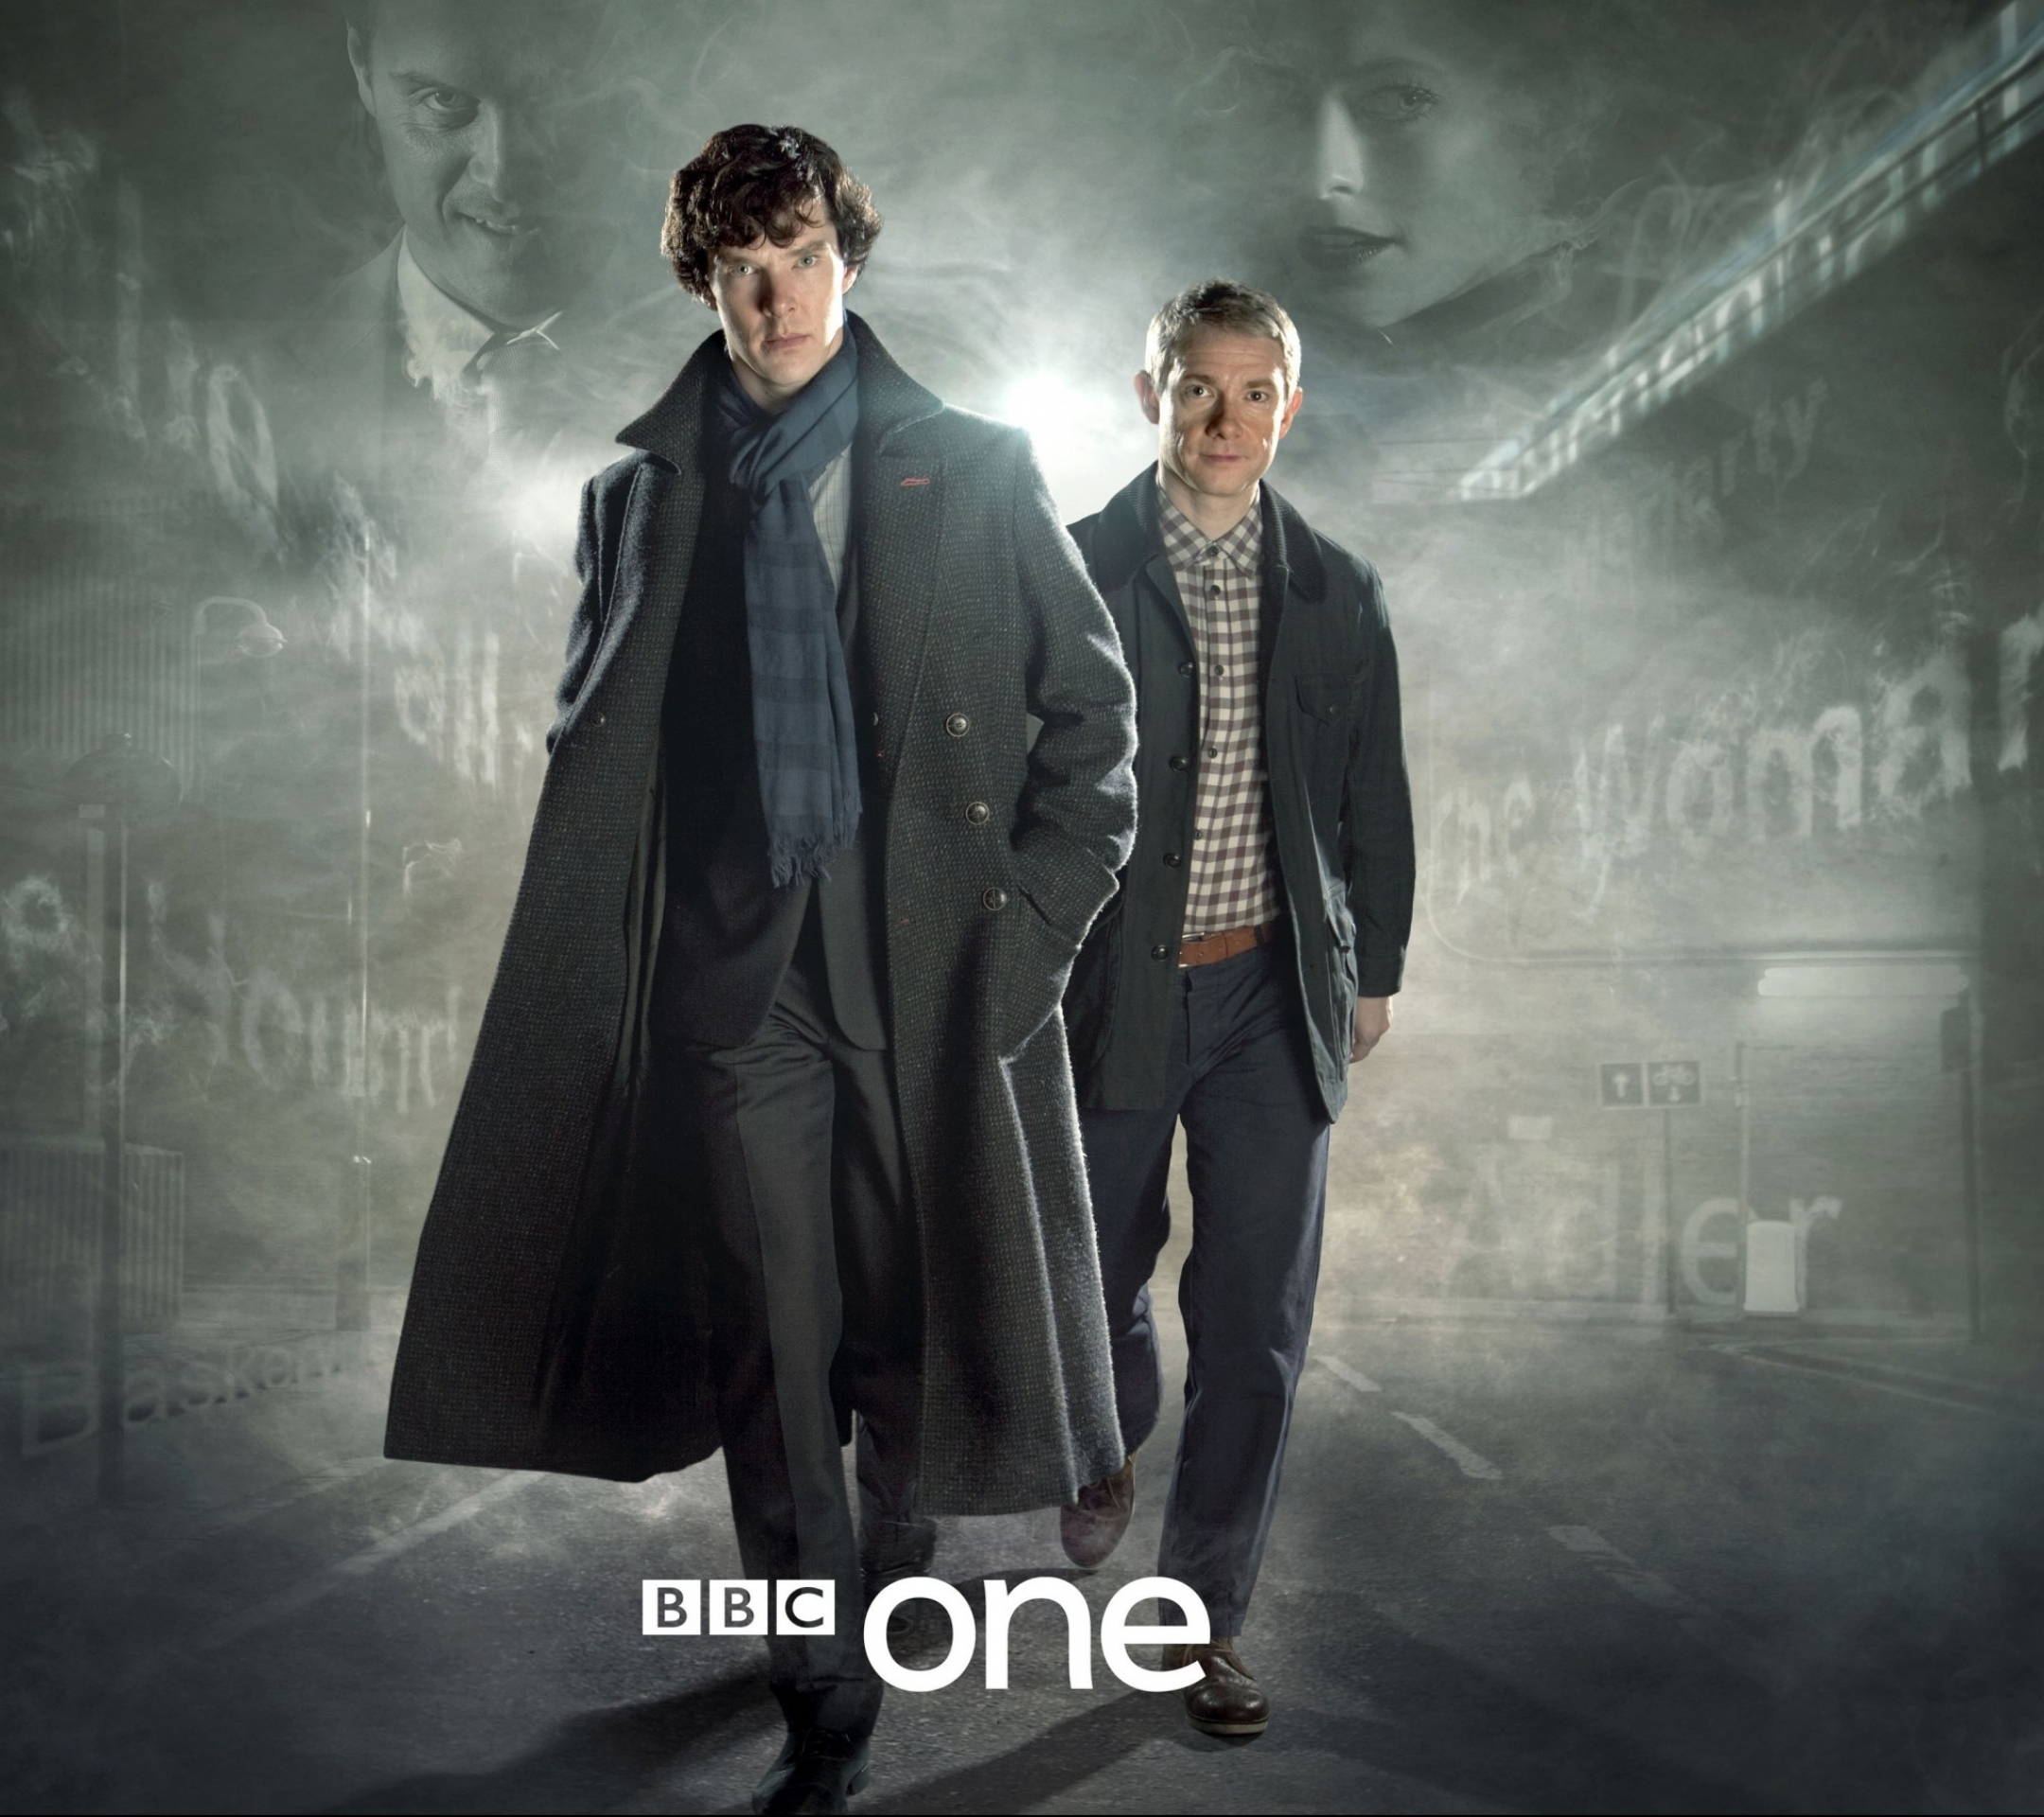 Baixar papel de parede para celular de Sherlock, Benedict Cumberbatch, Programa De Tv, Ator, Sherlock Holmes, Dr Watson, Martin Freeman gratuito.